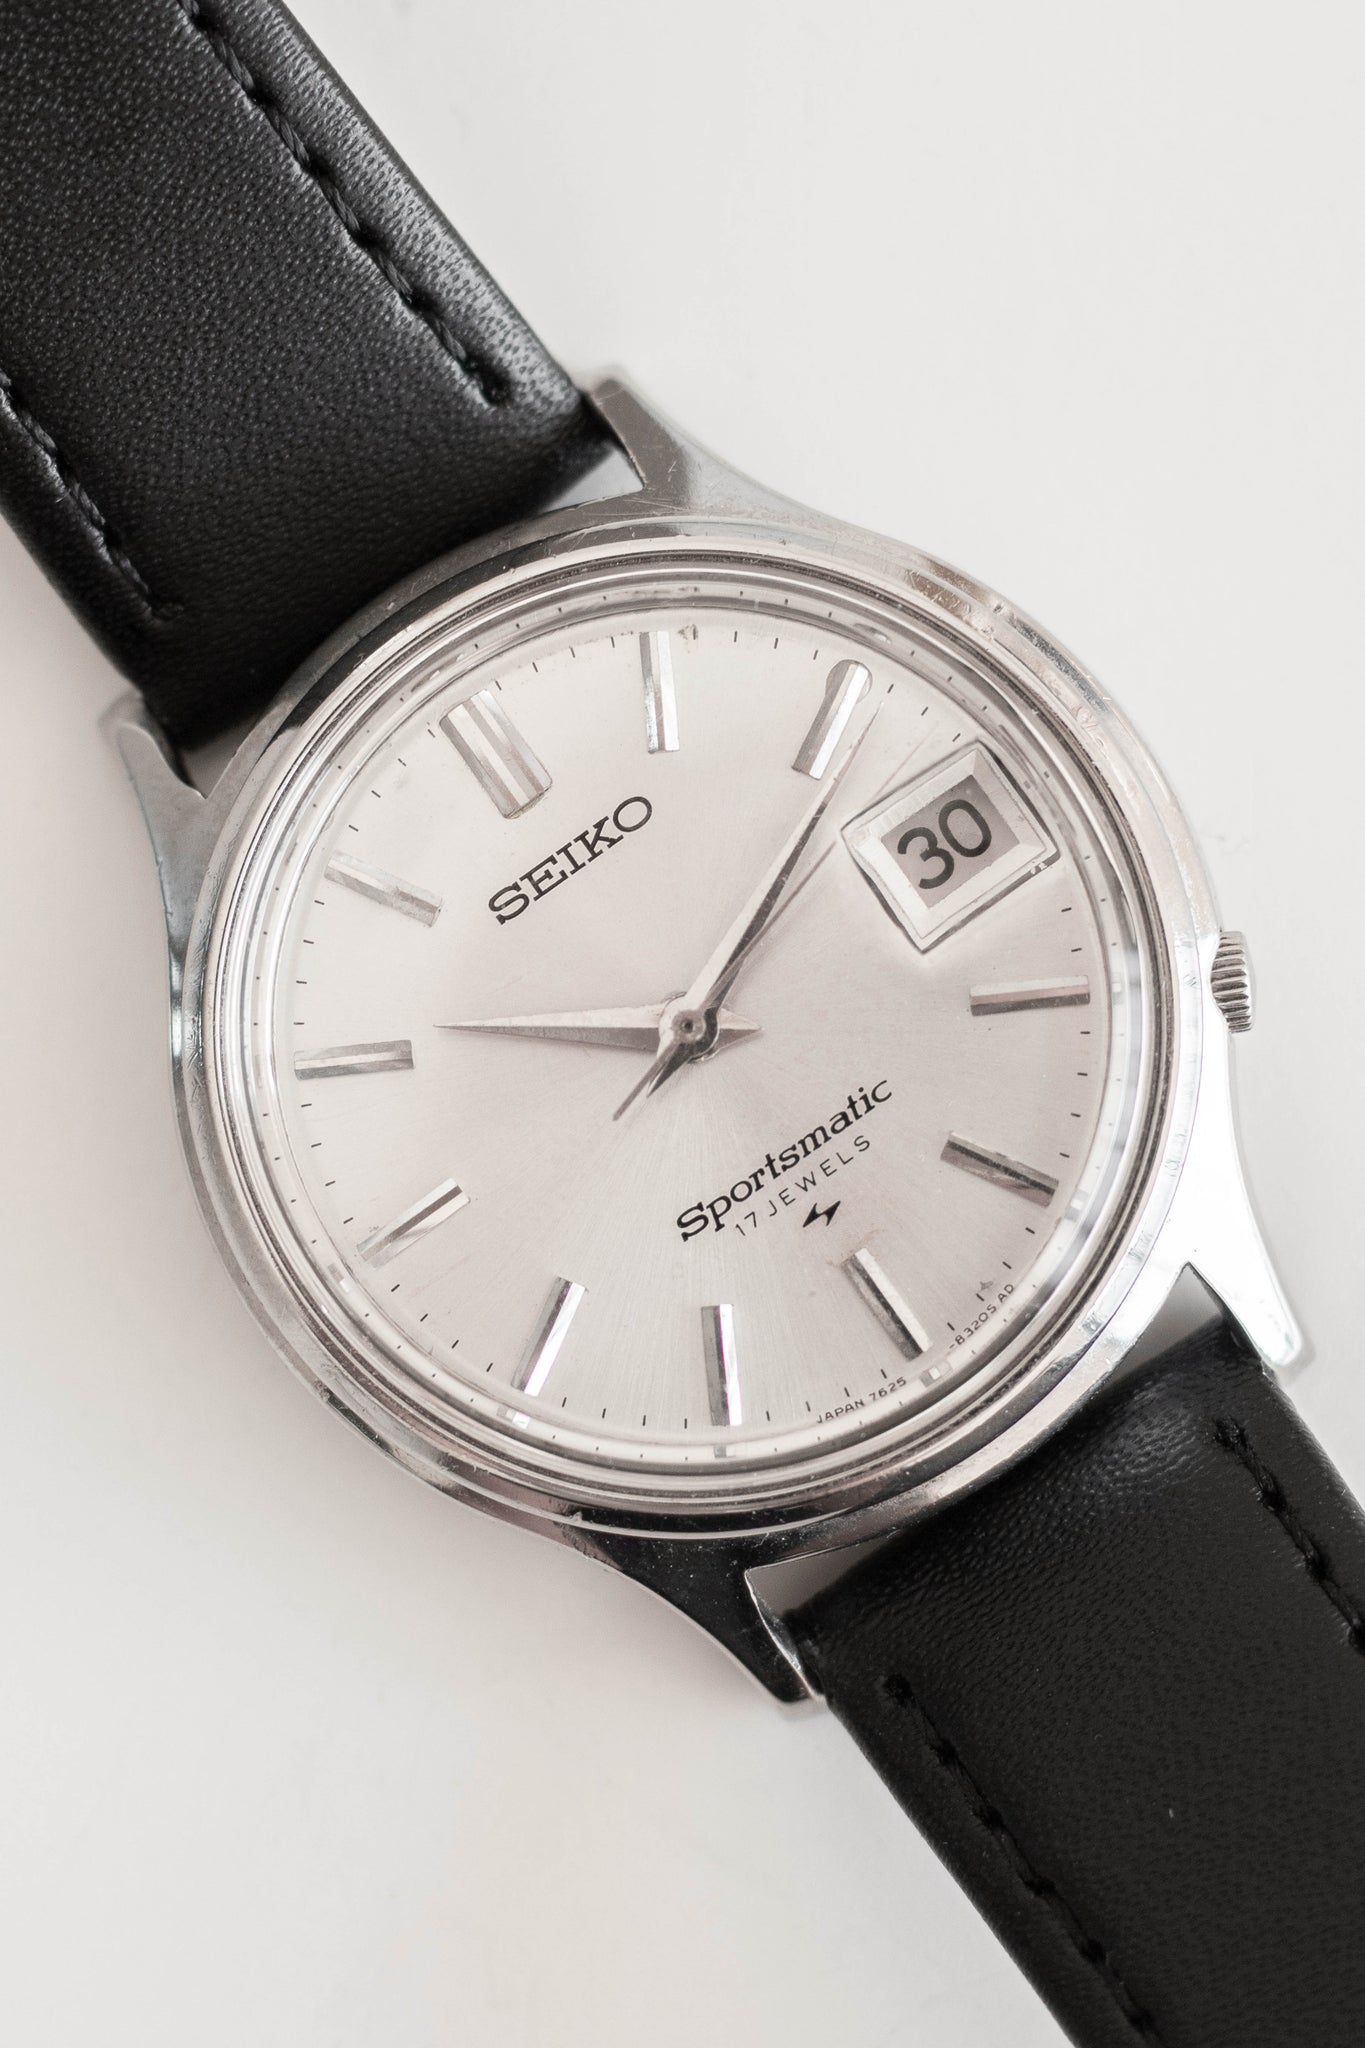 Seiko Sportsmatic Ref. 7625-8293 1968 | Vintage & Pre-Owned Luxury Watches  – Wynn & Thayne